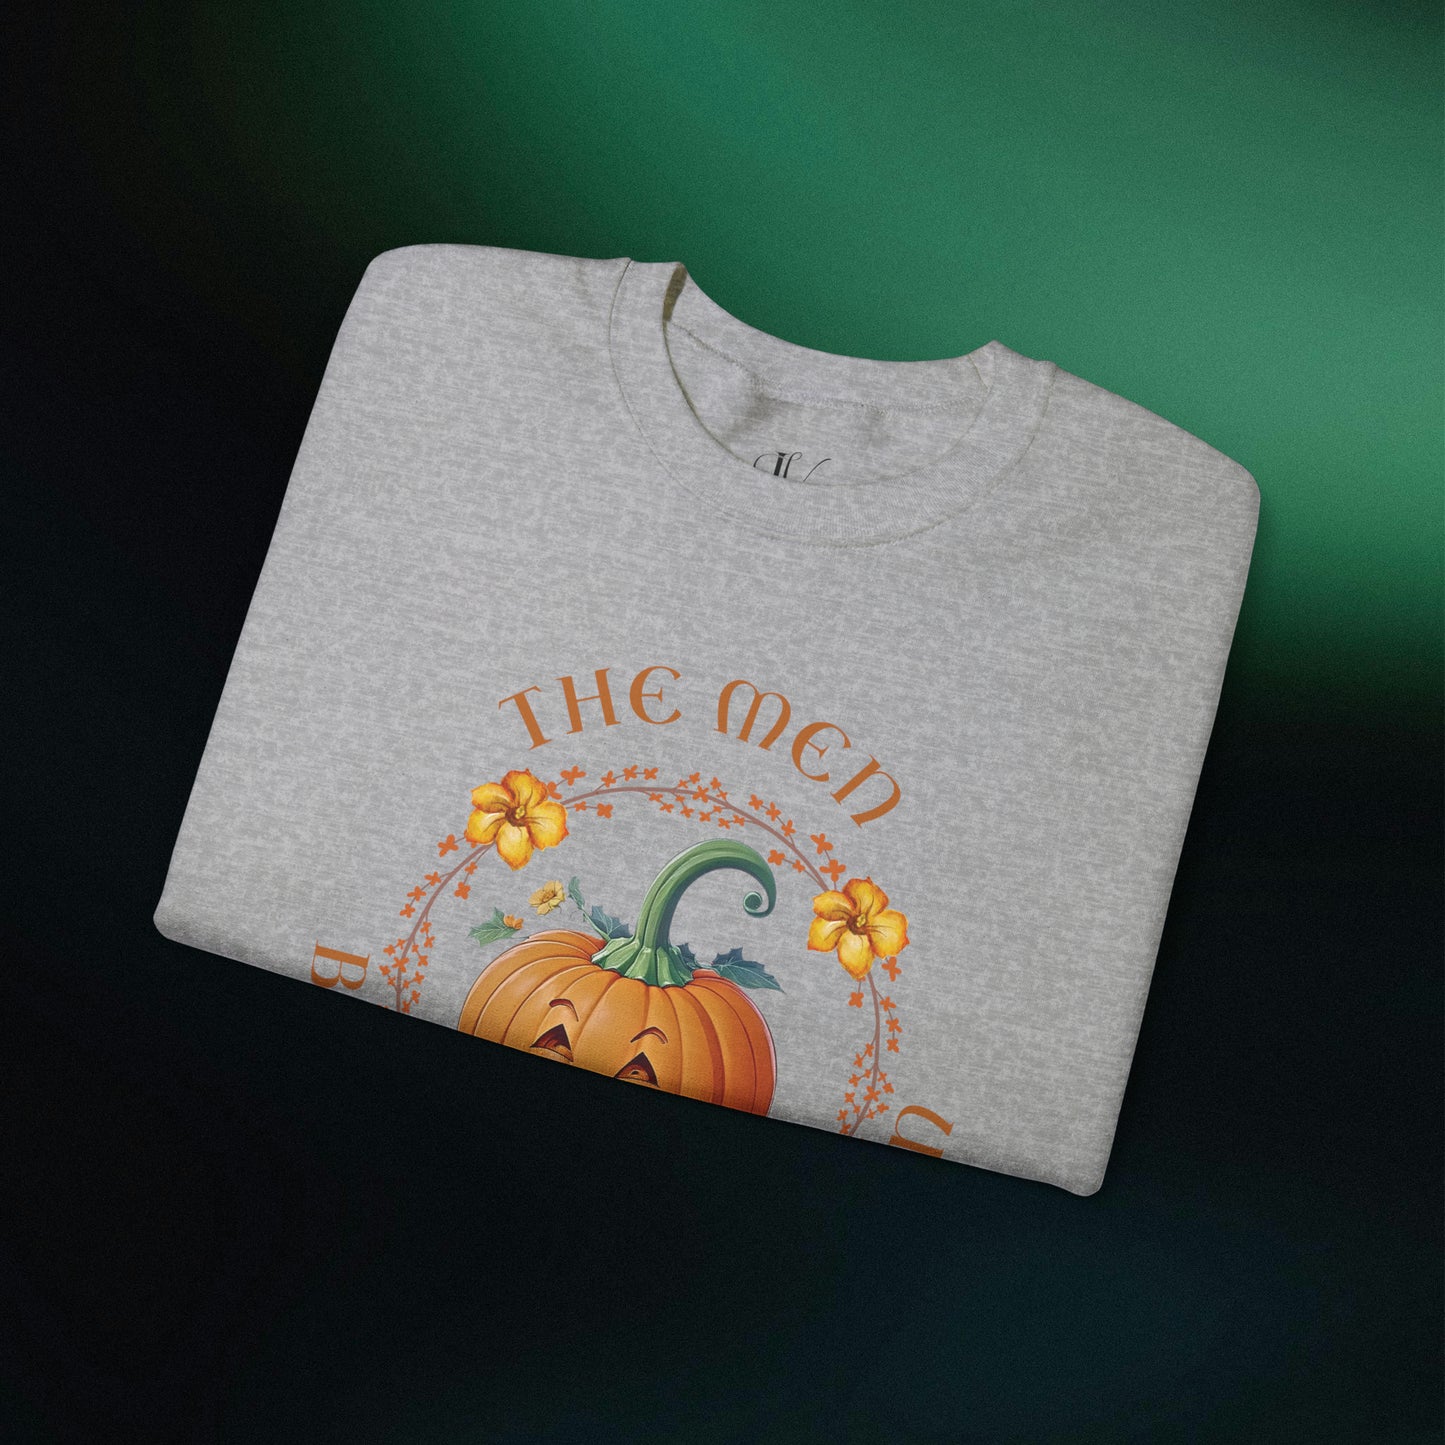 Growing a Little Pumpkin: Pregnancy Announcement Sweatshirt | Fall Maternity Crewneck - The Men Behind the Pumpkin | Matching Sweatshirt Sweatshirt   